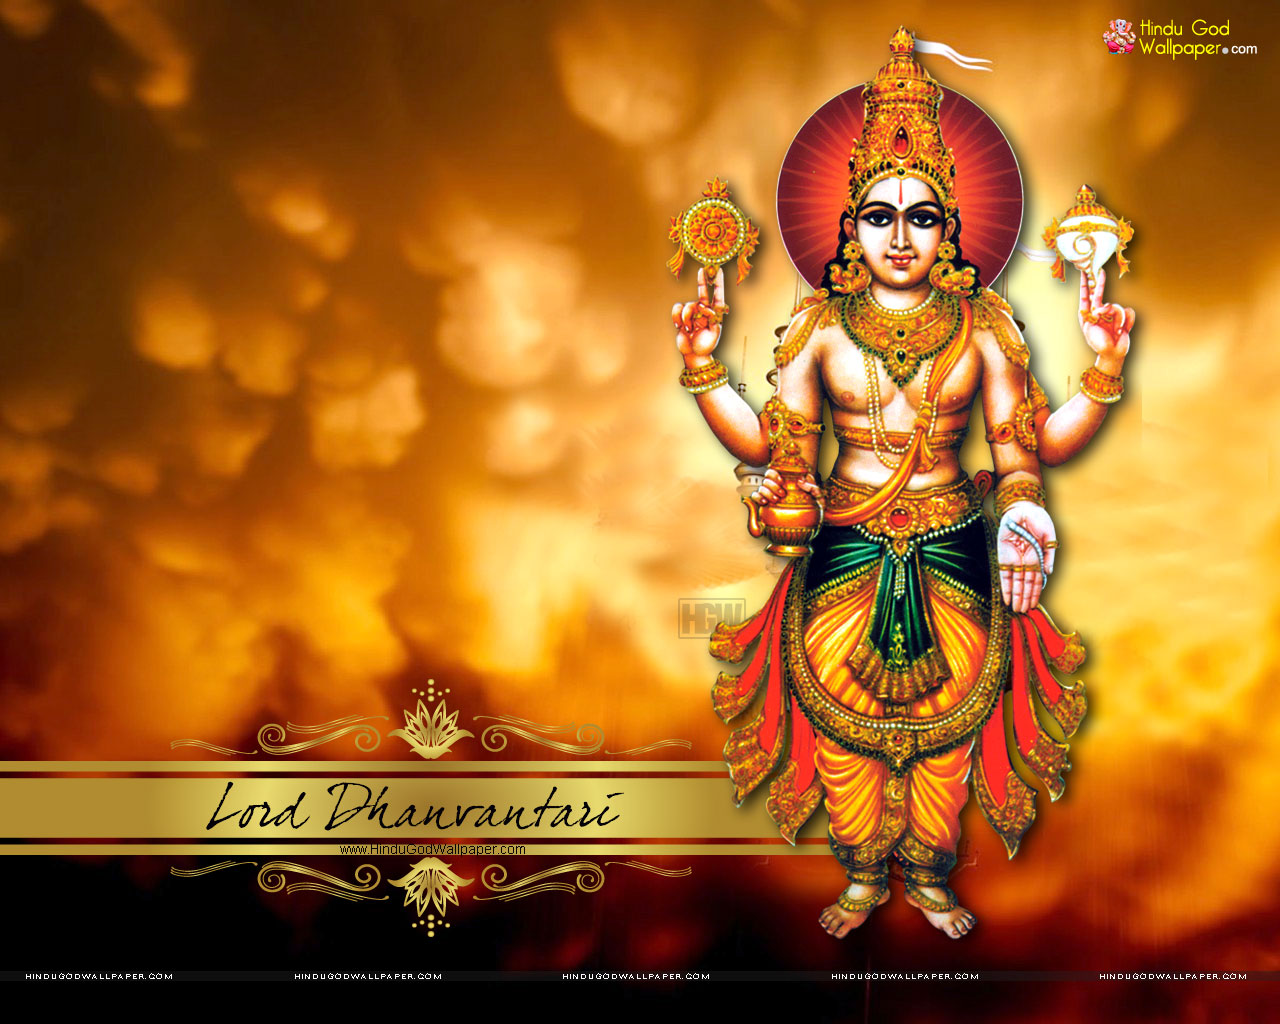 Hindu God Wallpapers: Nature wallpaper - All Free Download